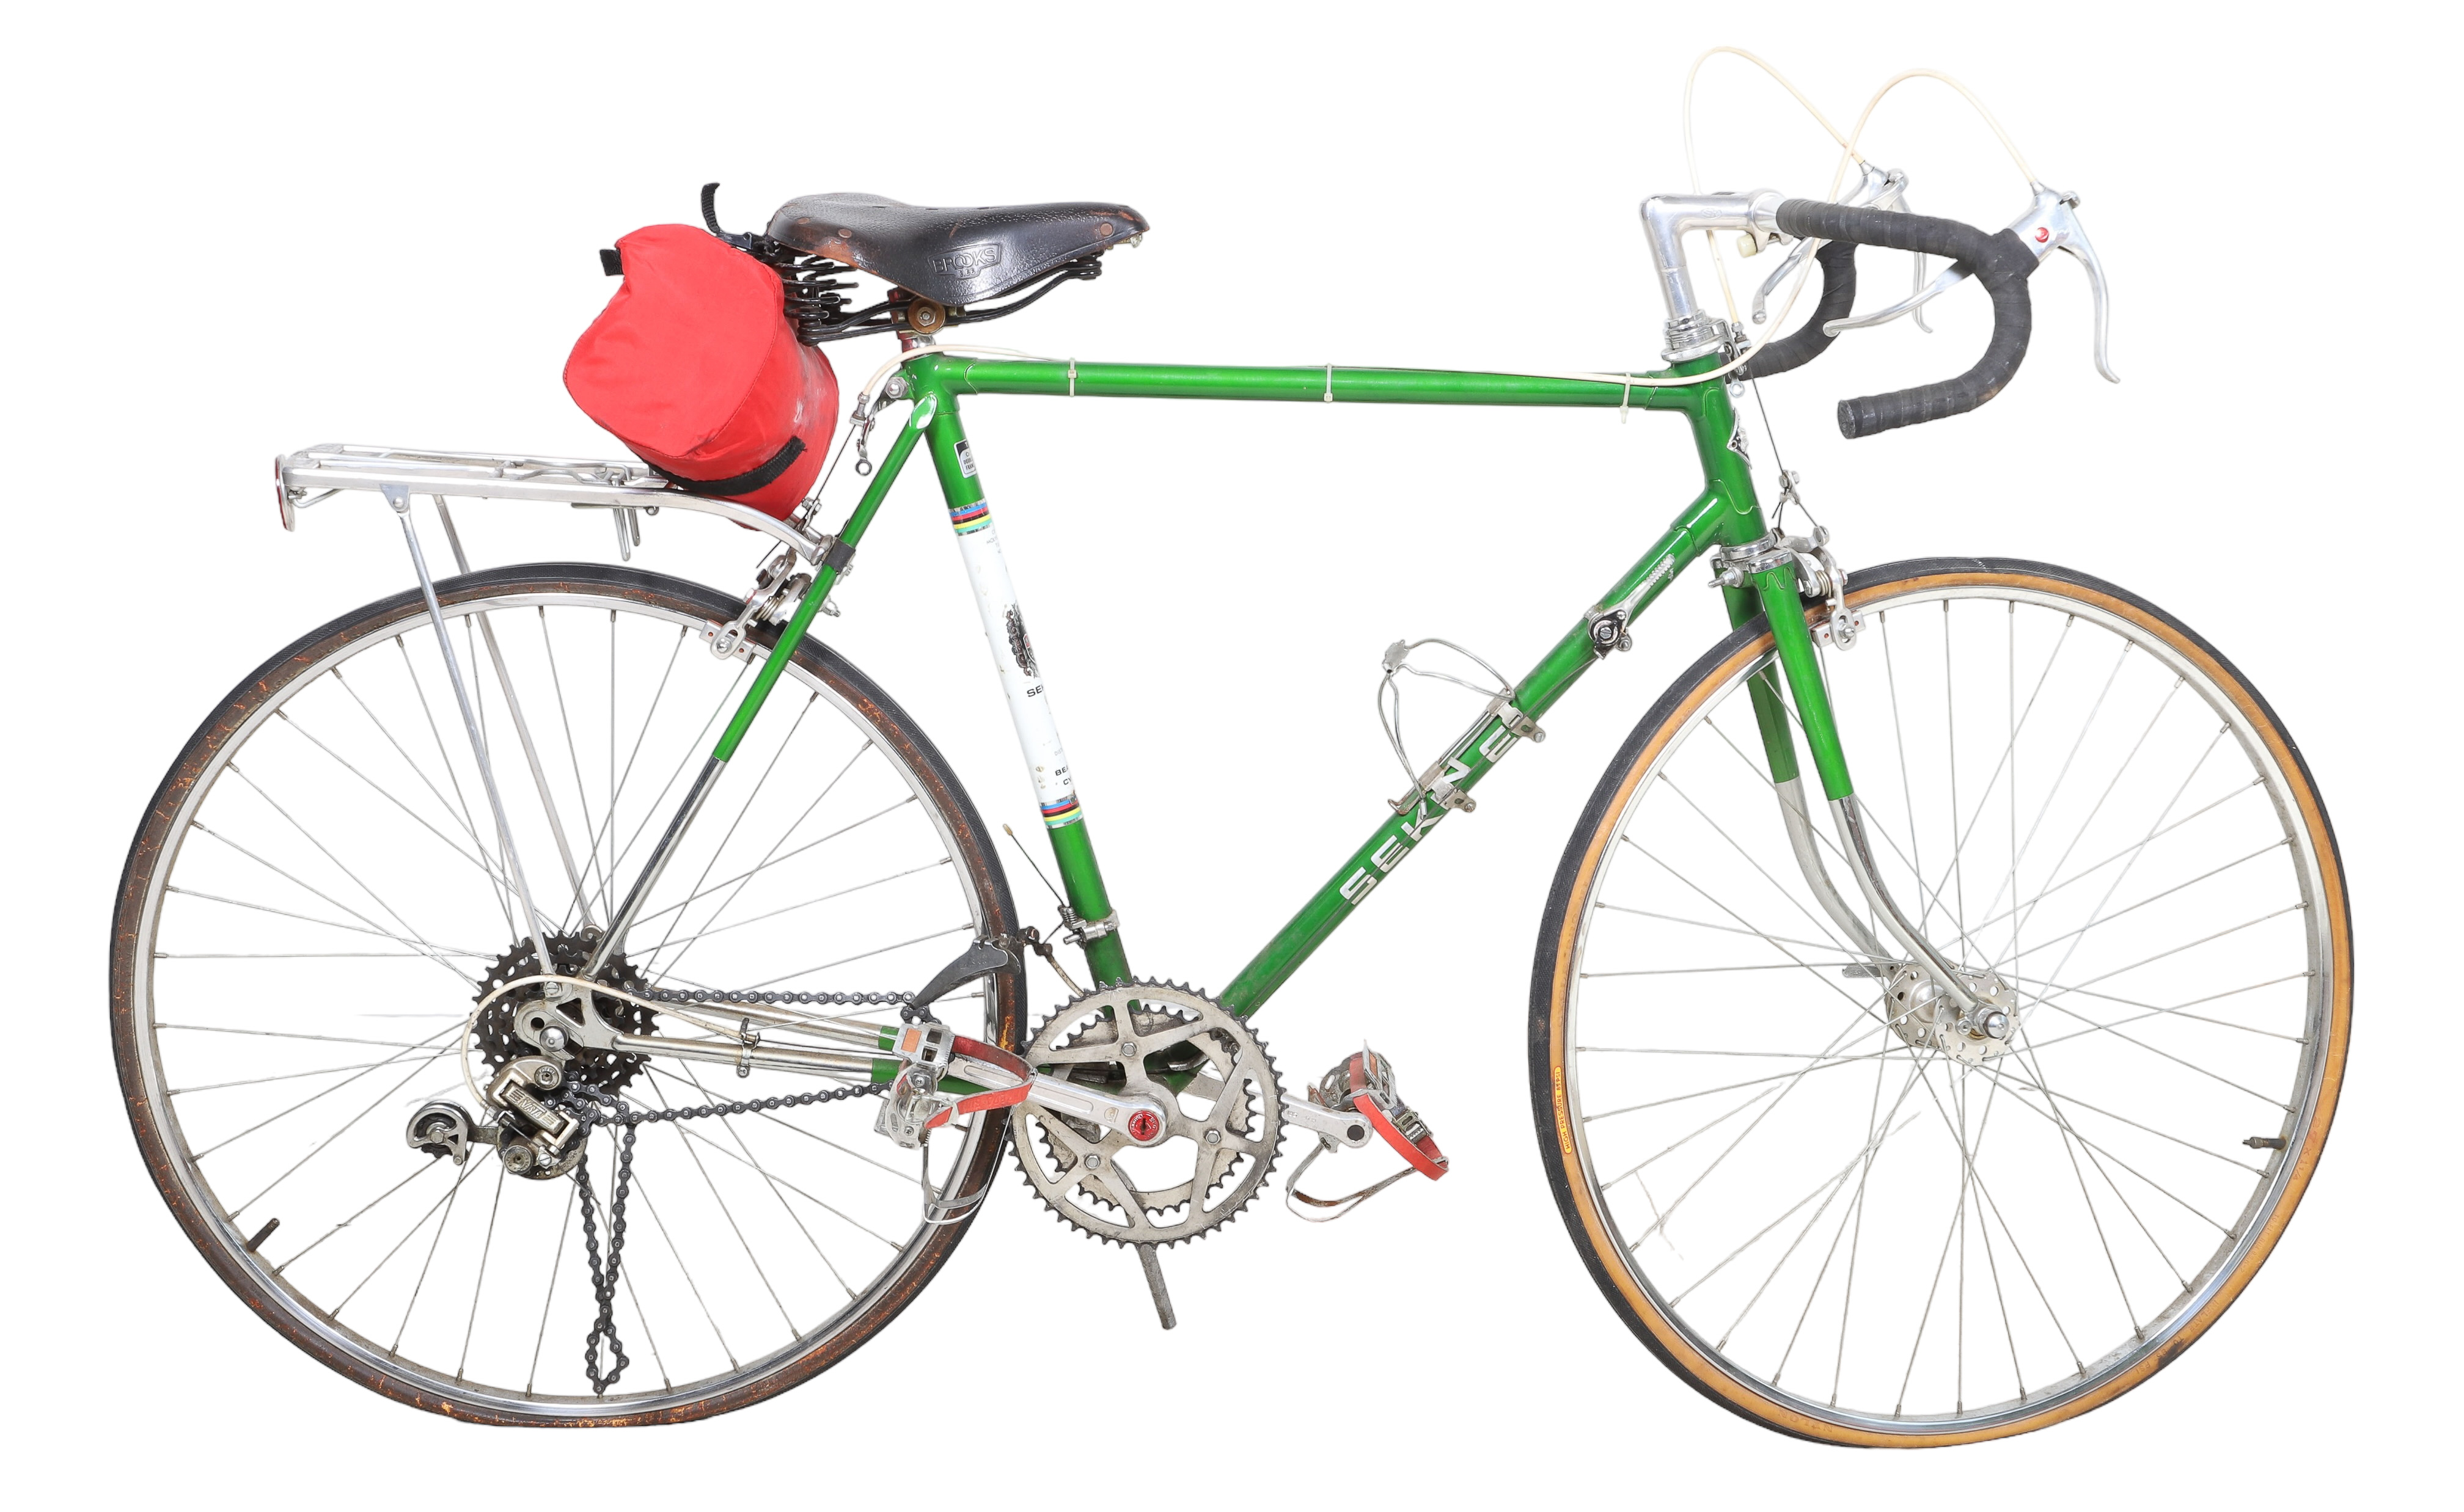 Skine Sekine bicycle, green painted